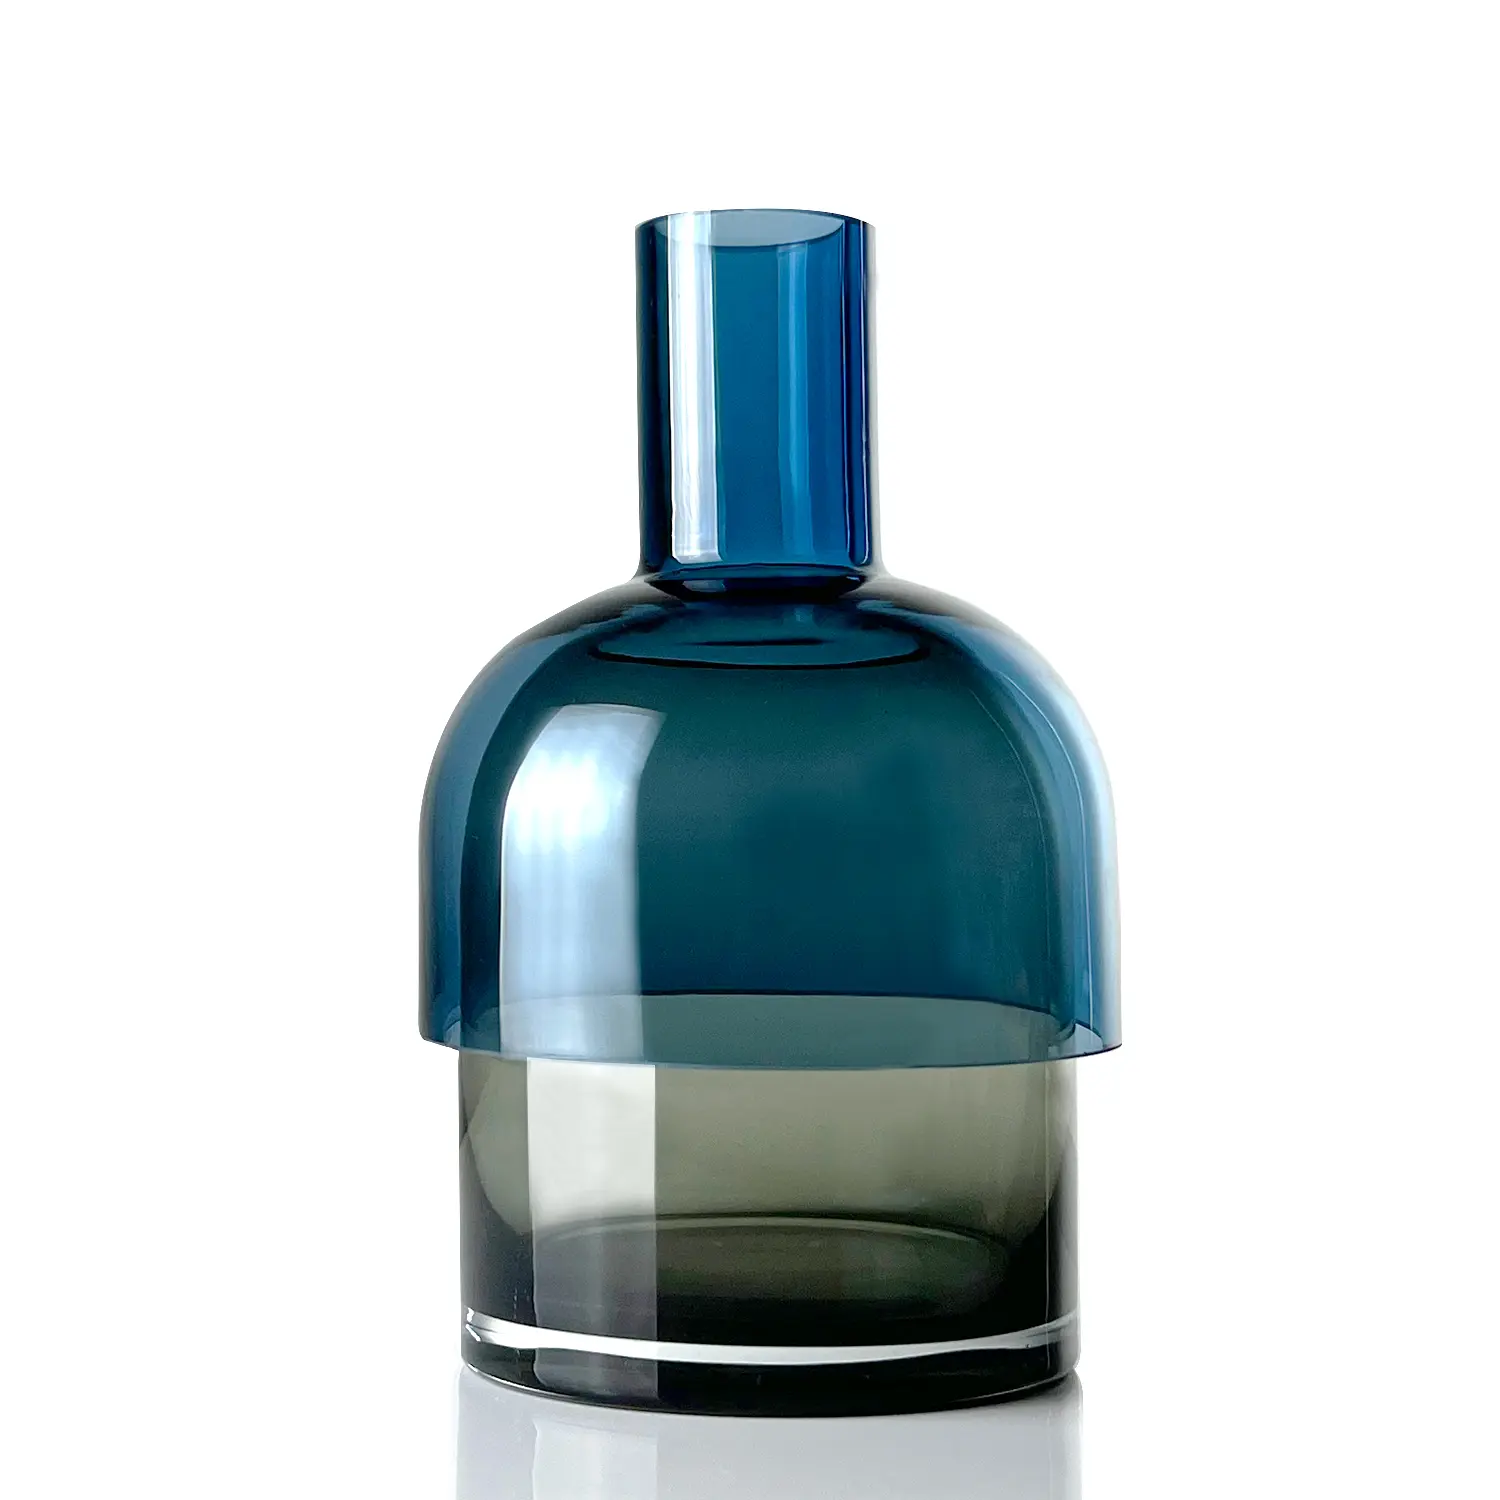 Flip Vase Blue and Gray - Large